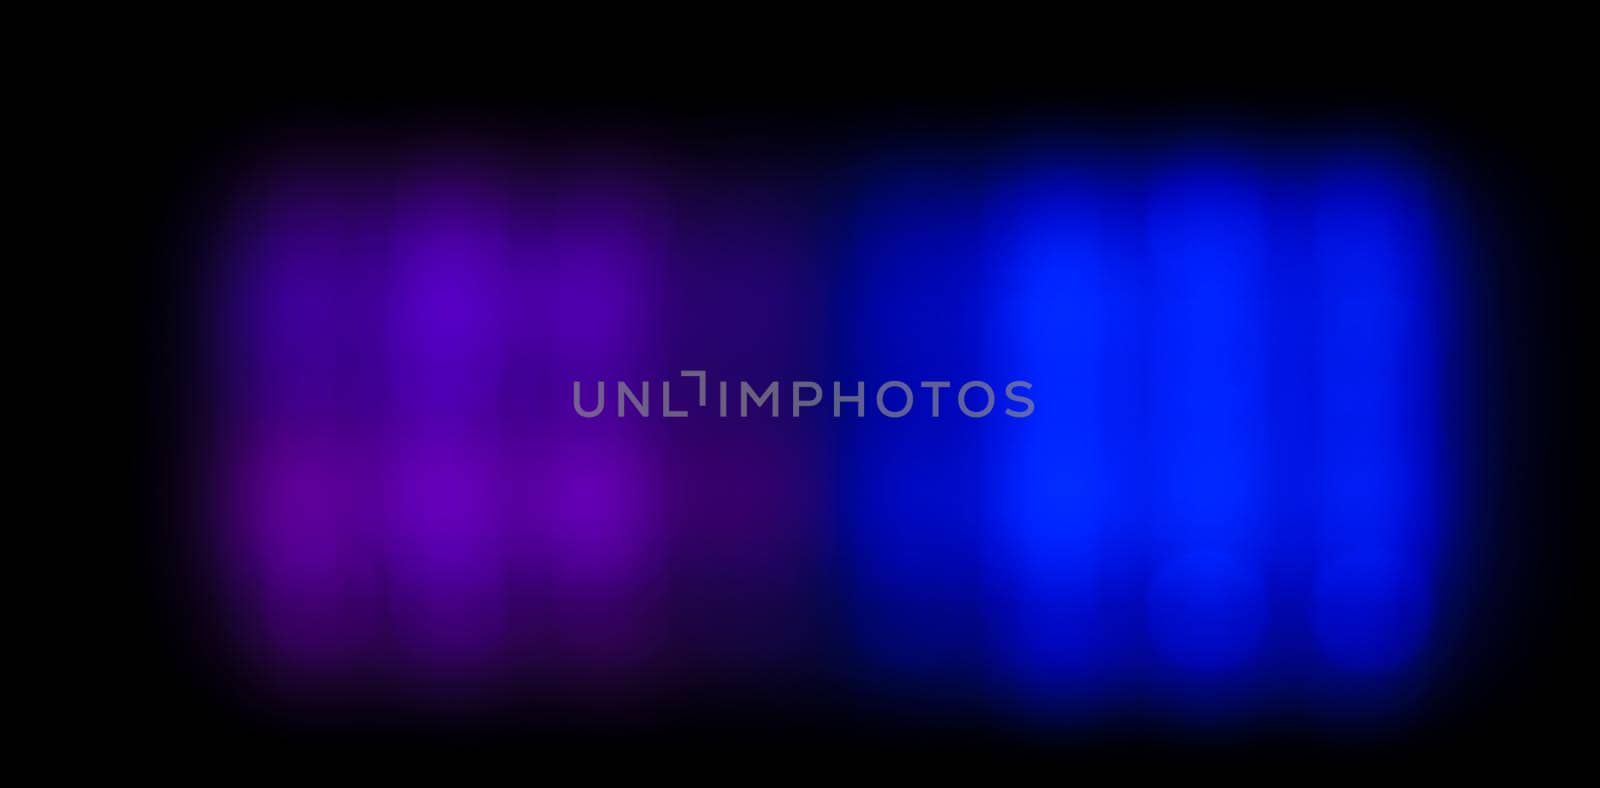 blured colorful lighting on black background